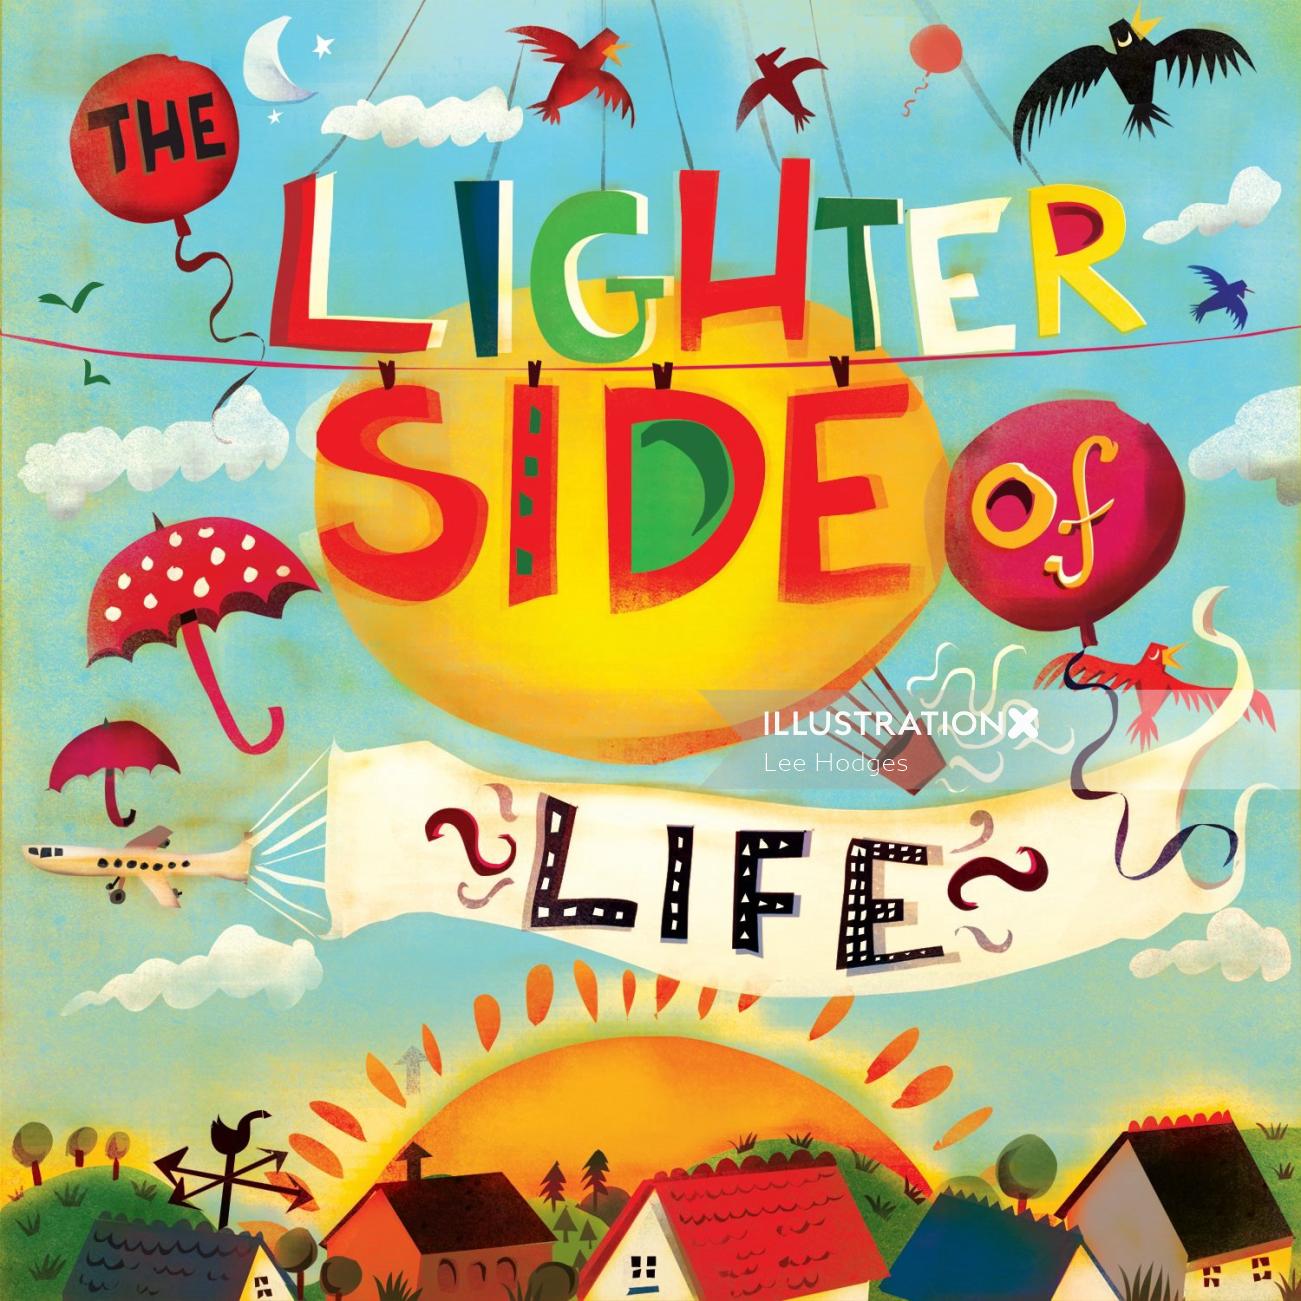 Lettering art of The Lighter Side of Life